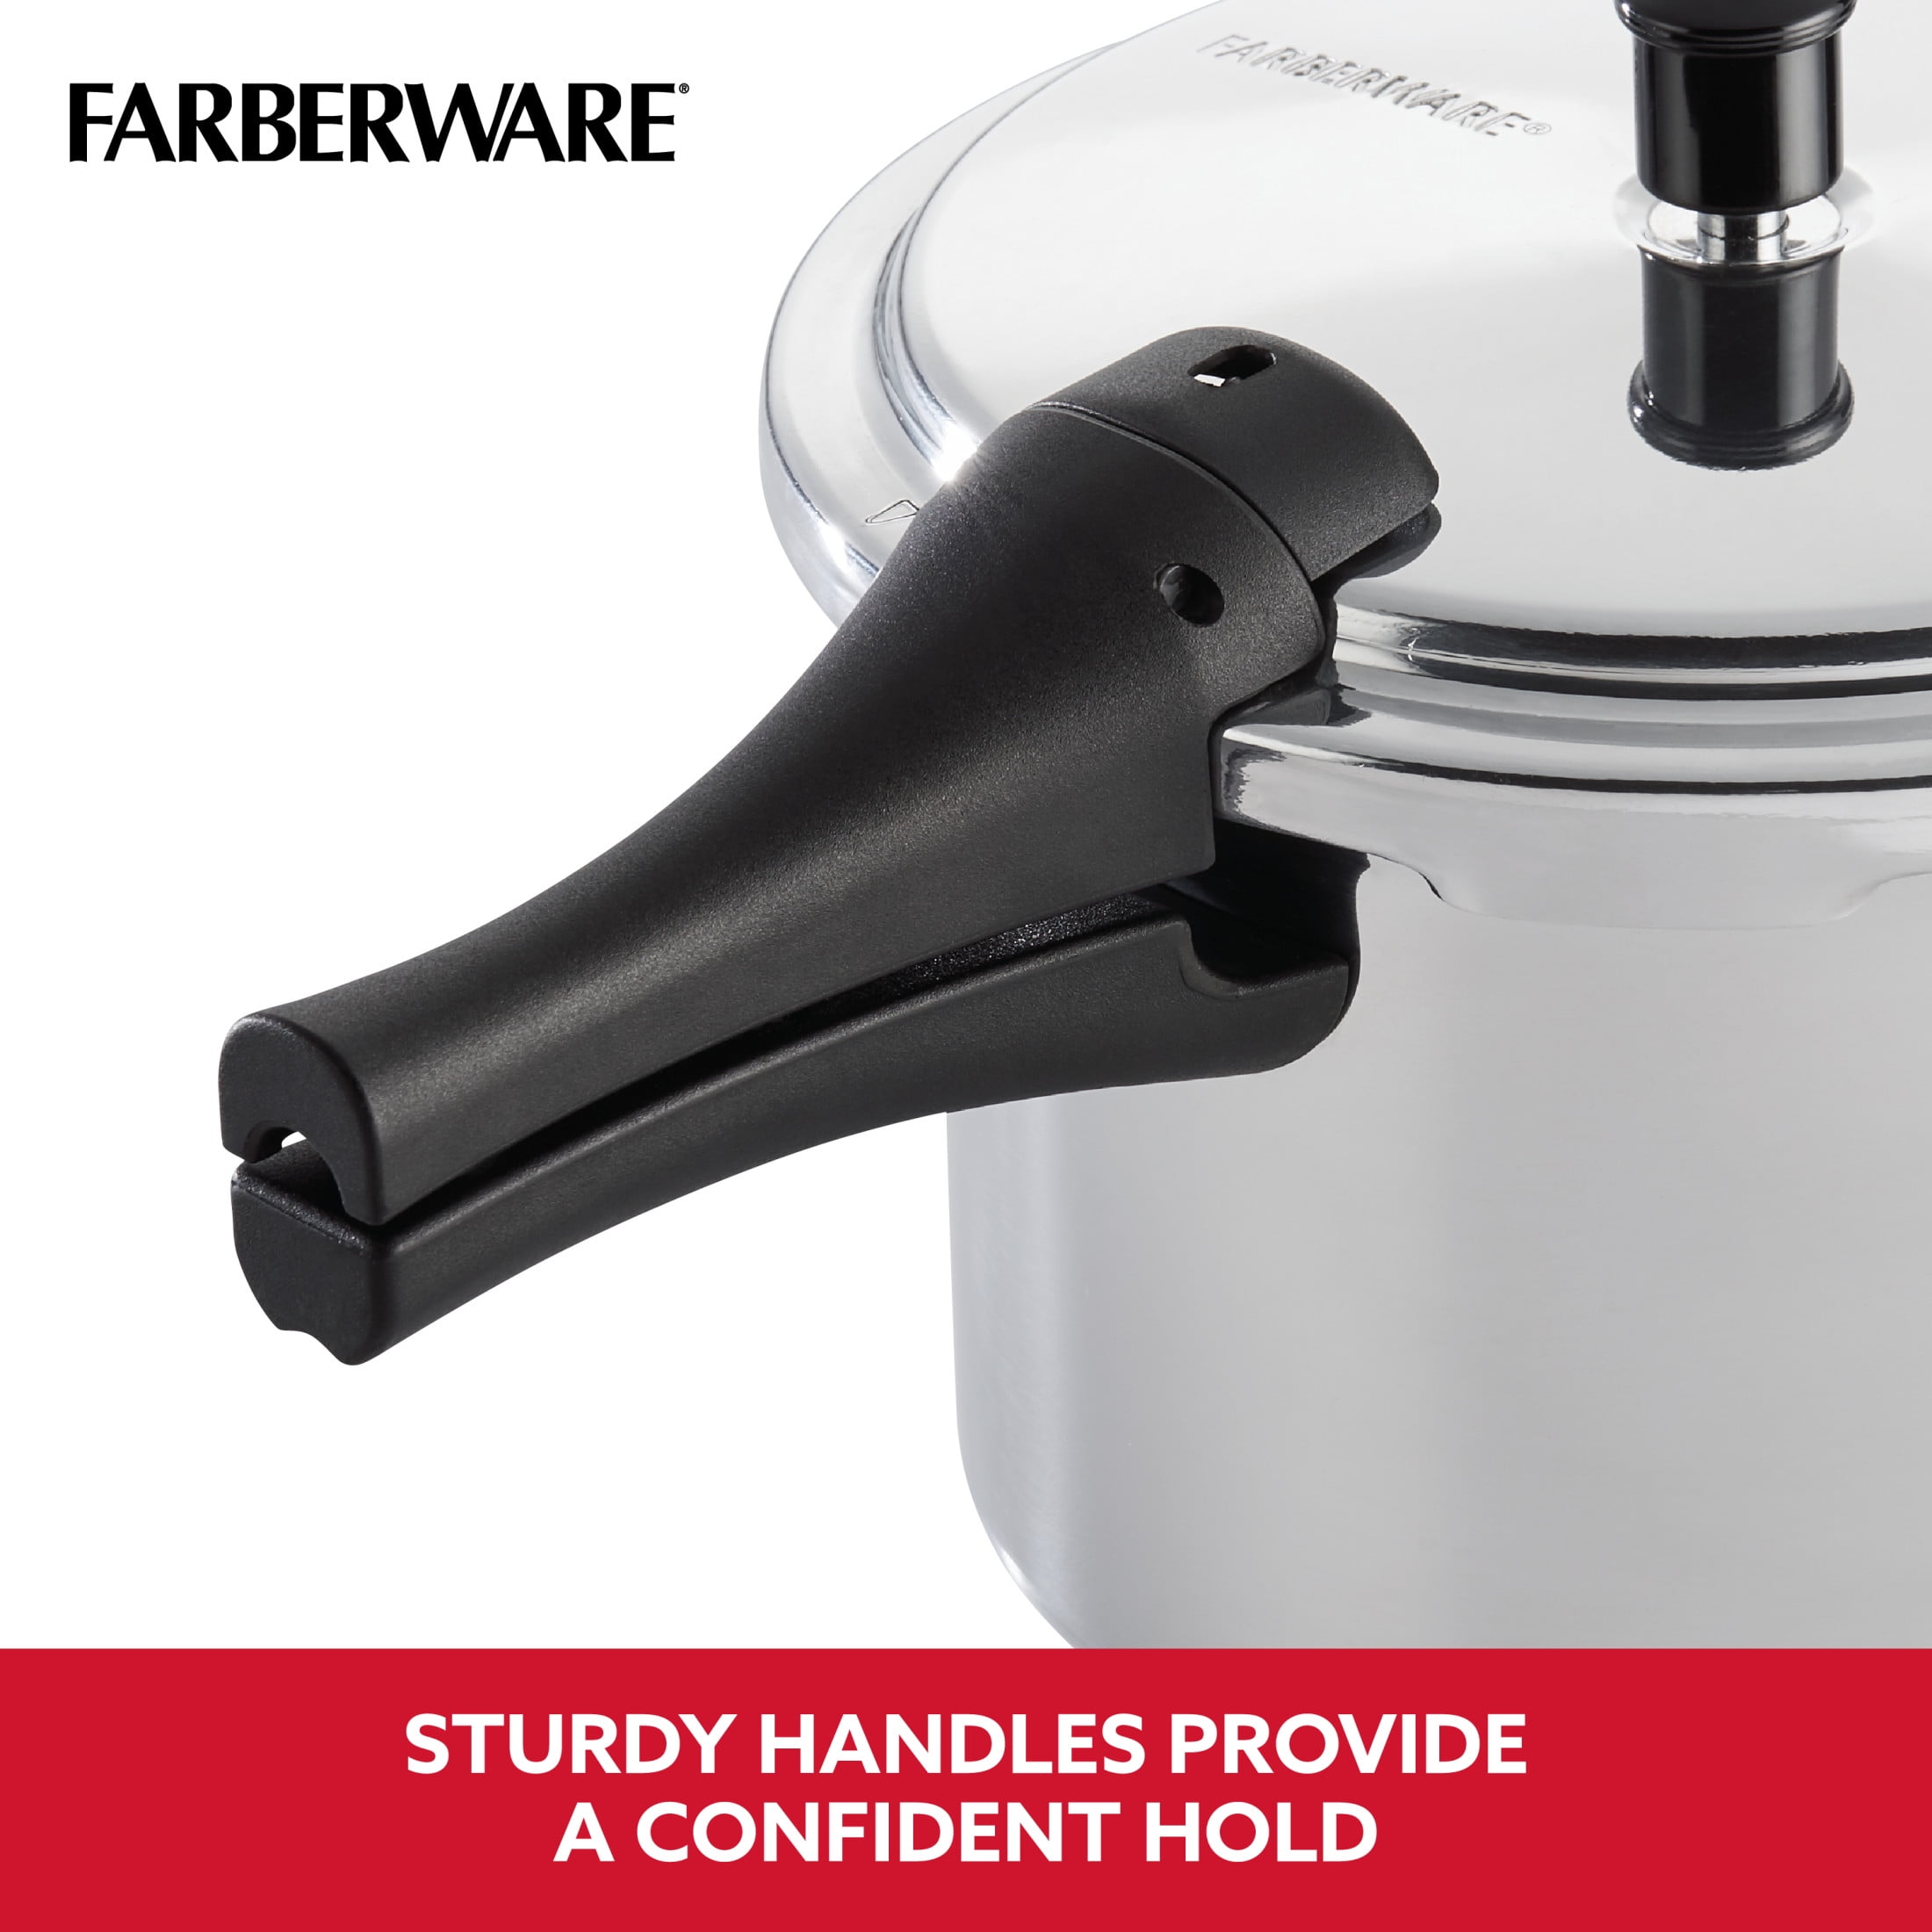 Farberware 6 Quart Programmable Digital Pressure Cooker - Silver/Black for  sale online